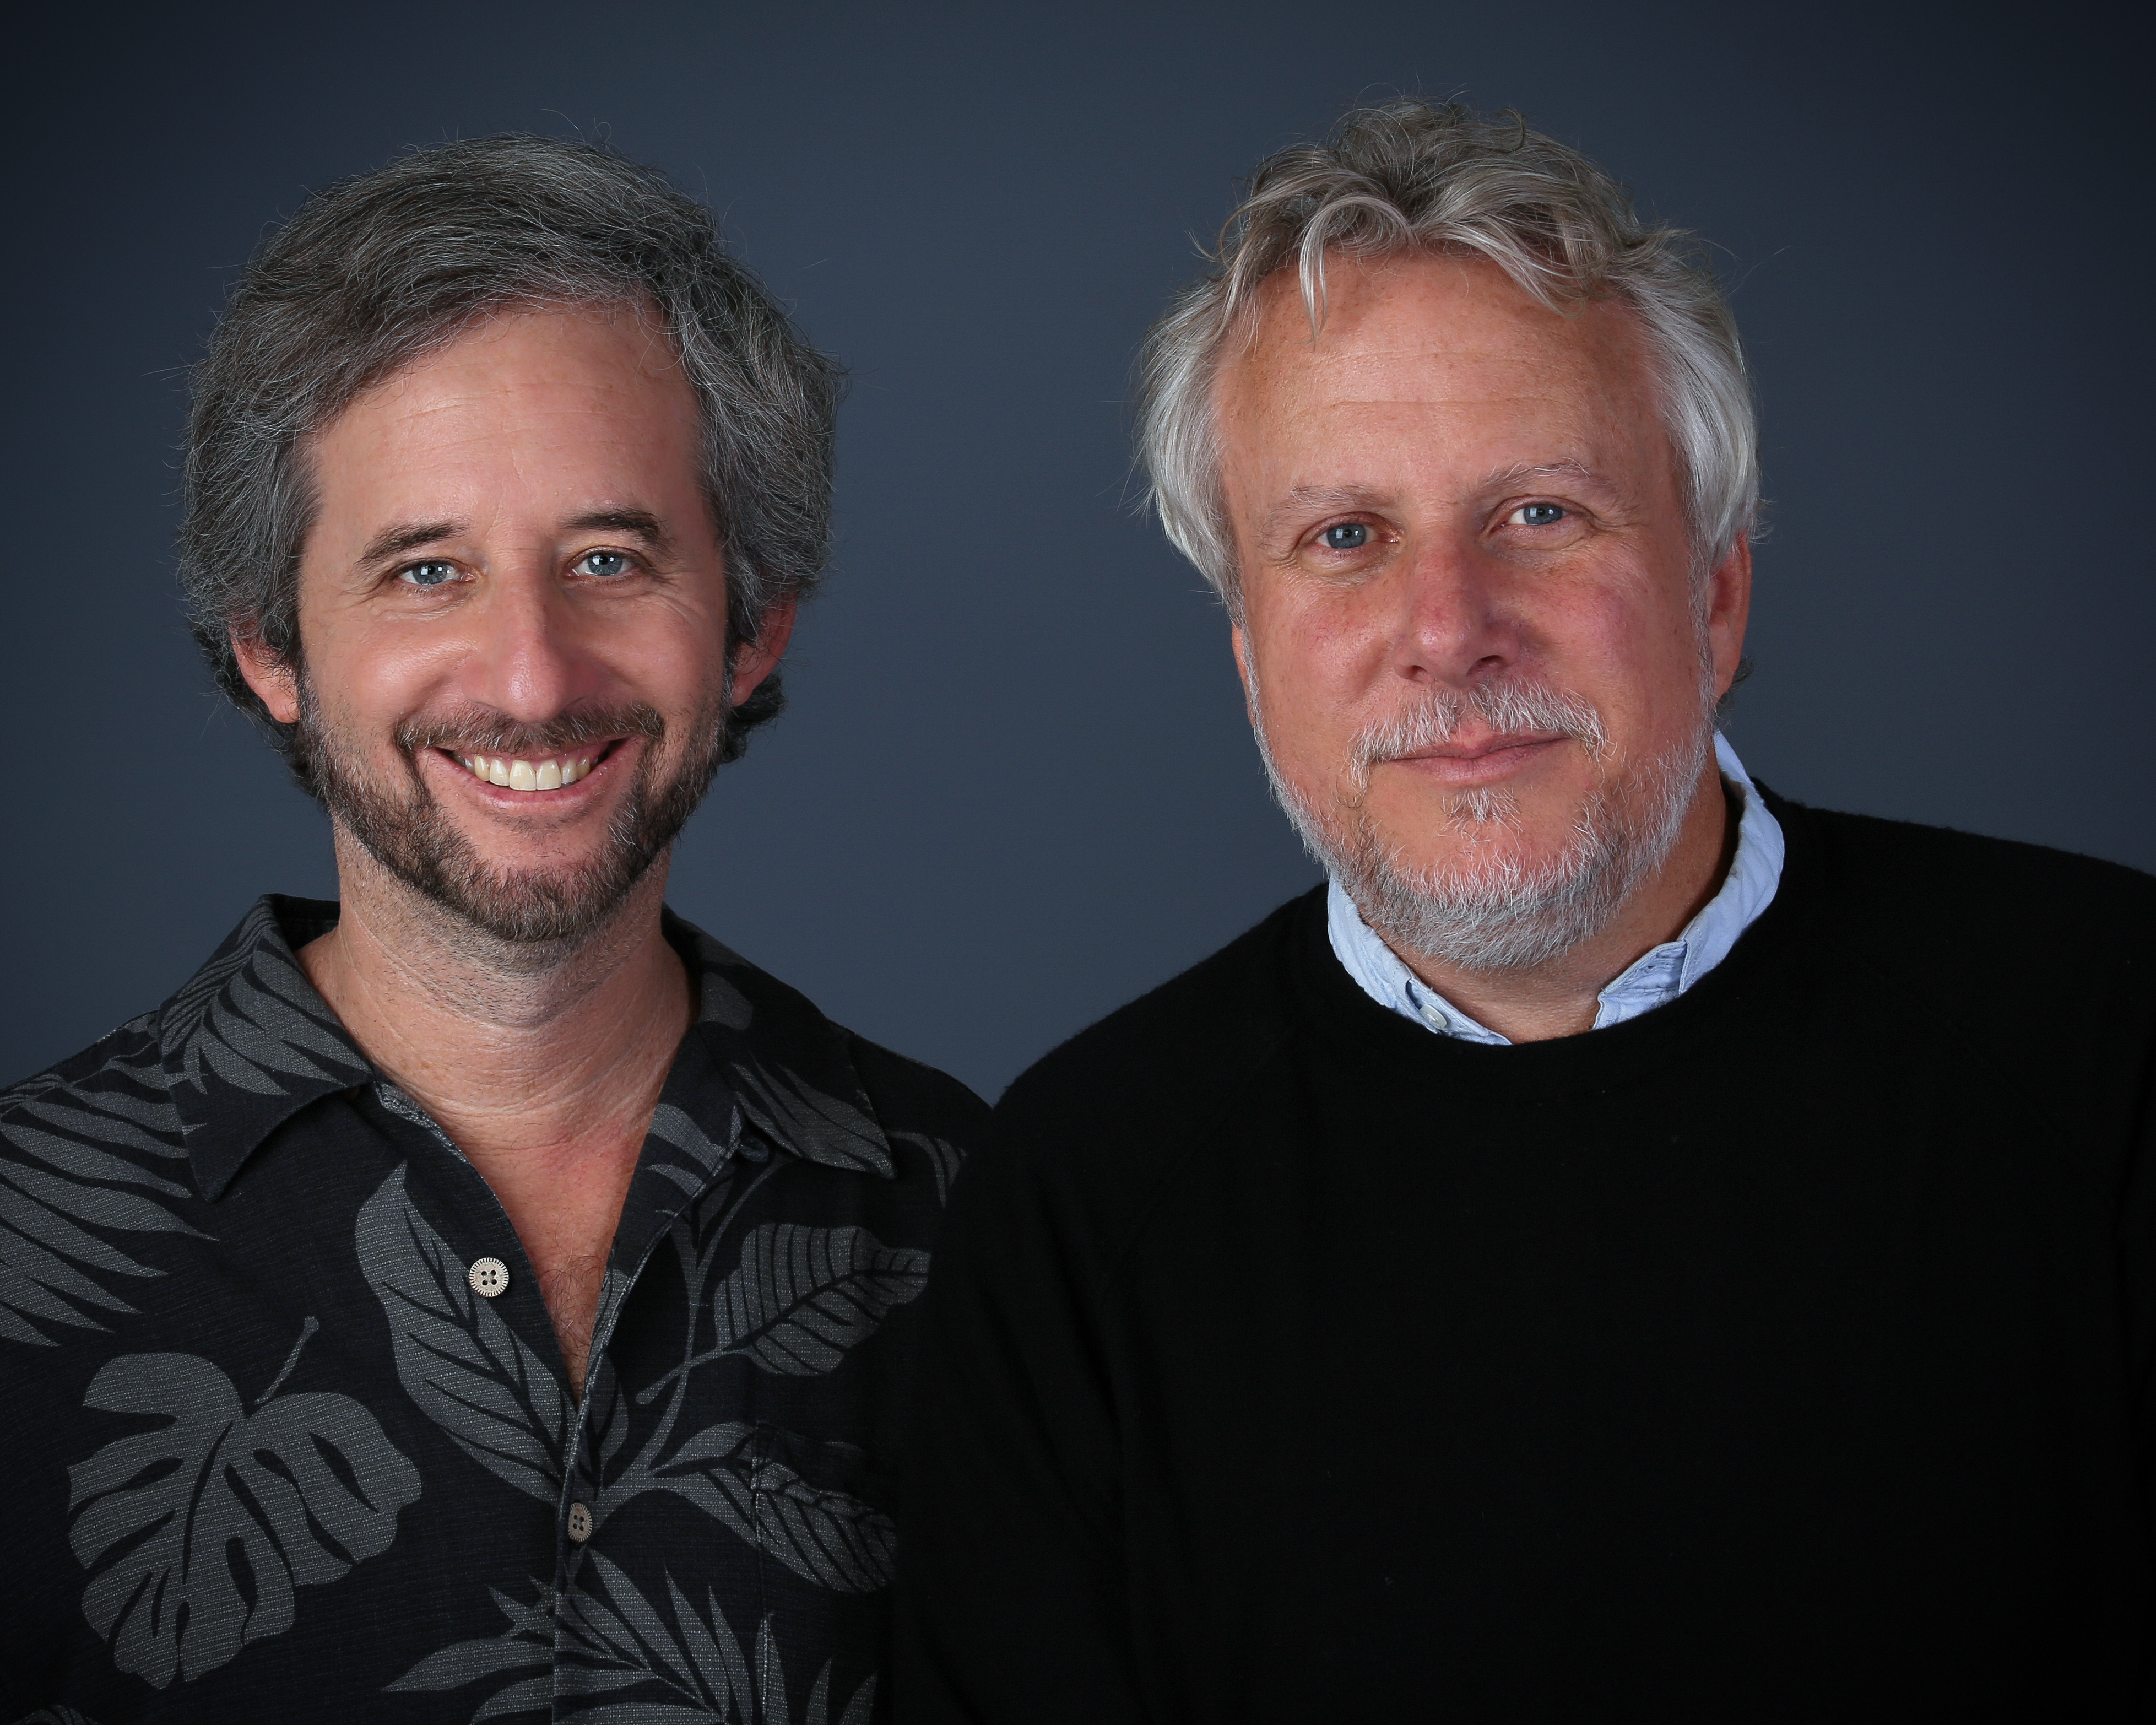 Scott Alexander and Larry Karaszewski, 2014